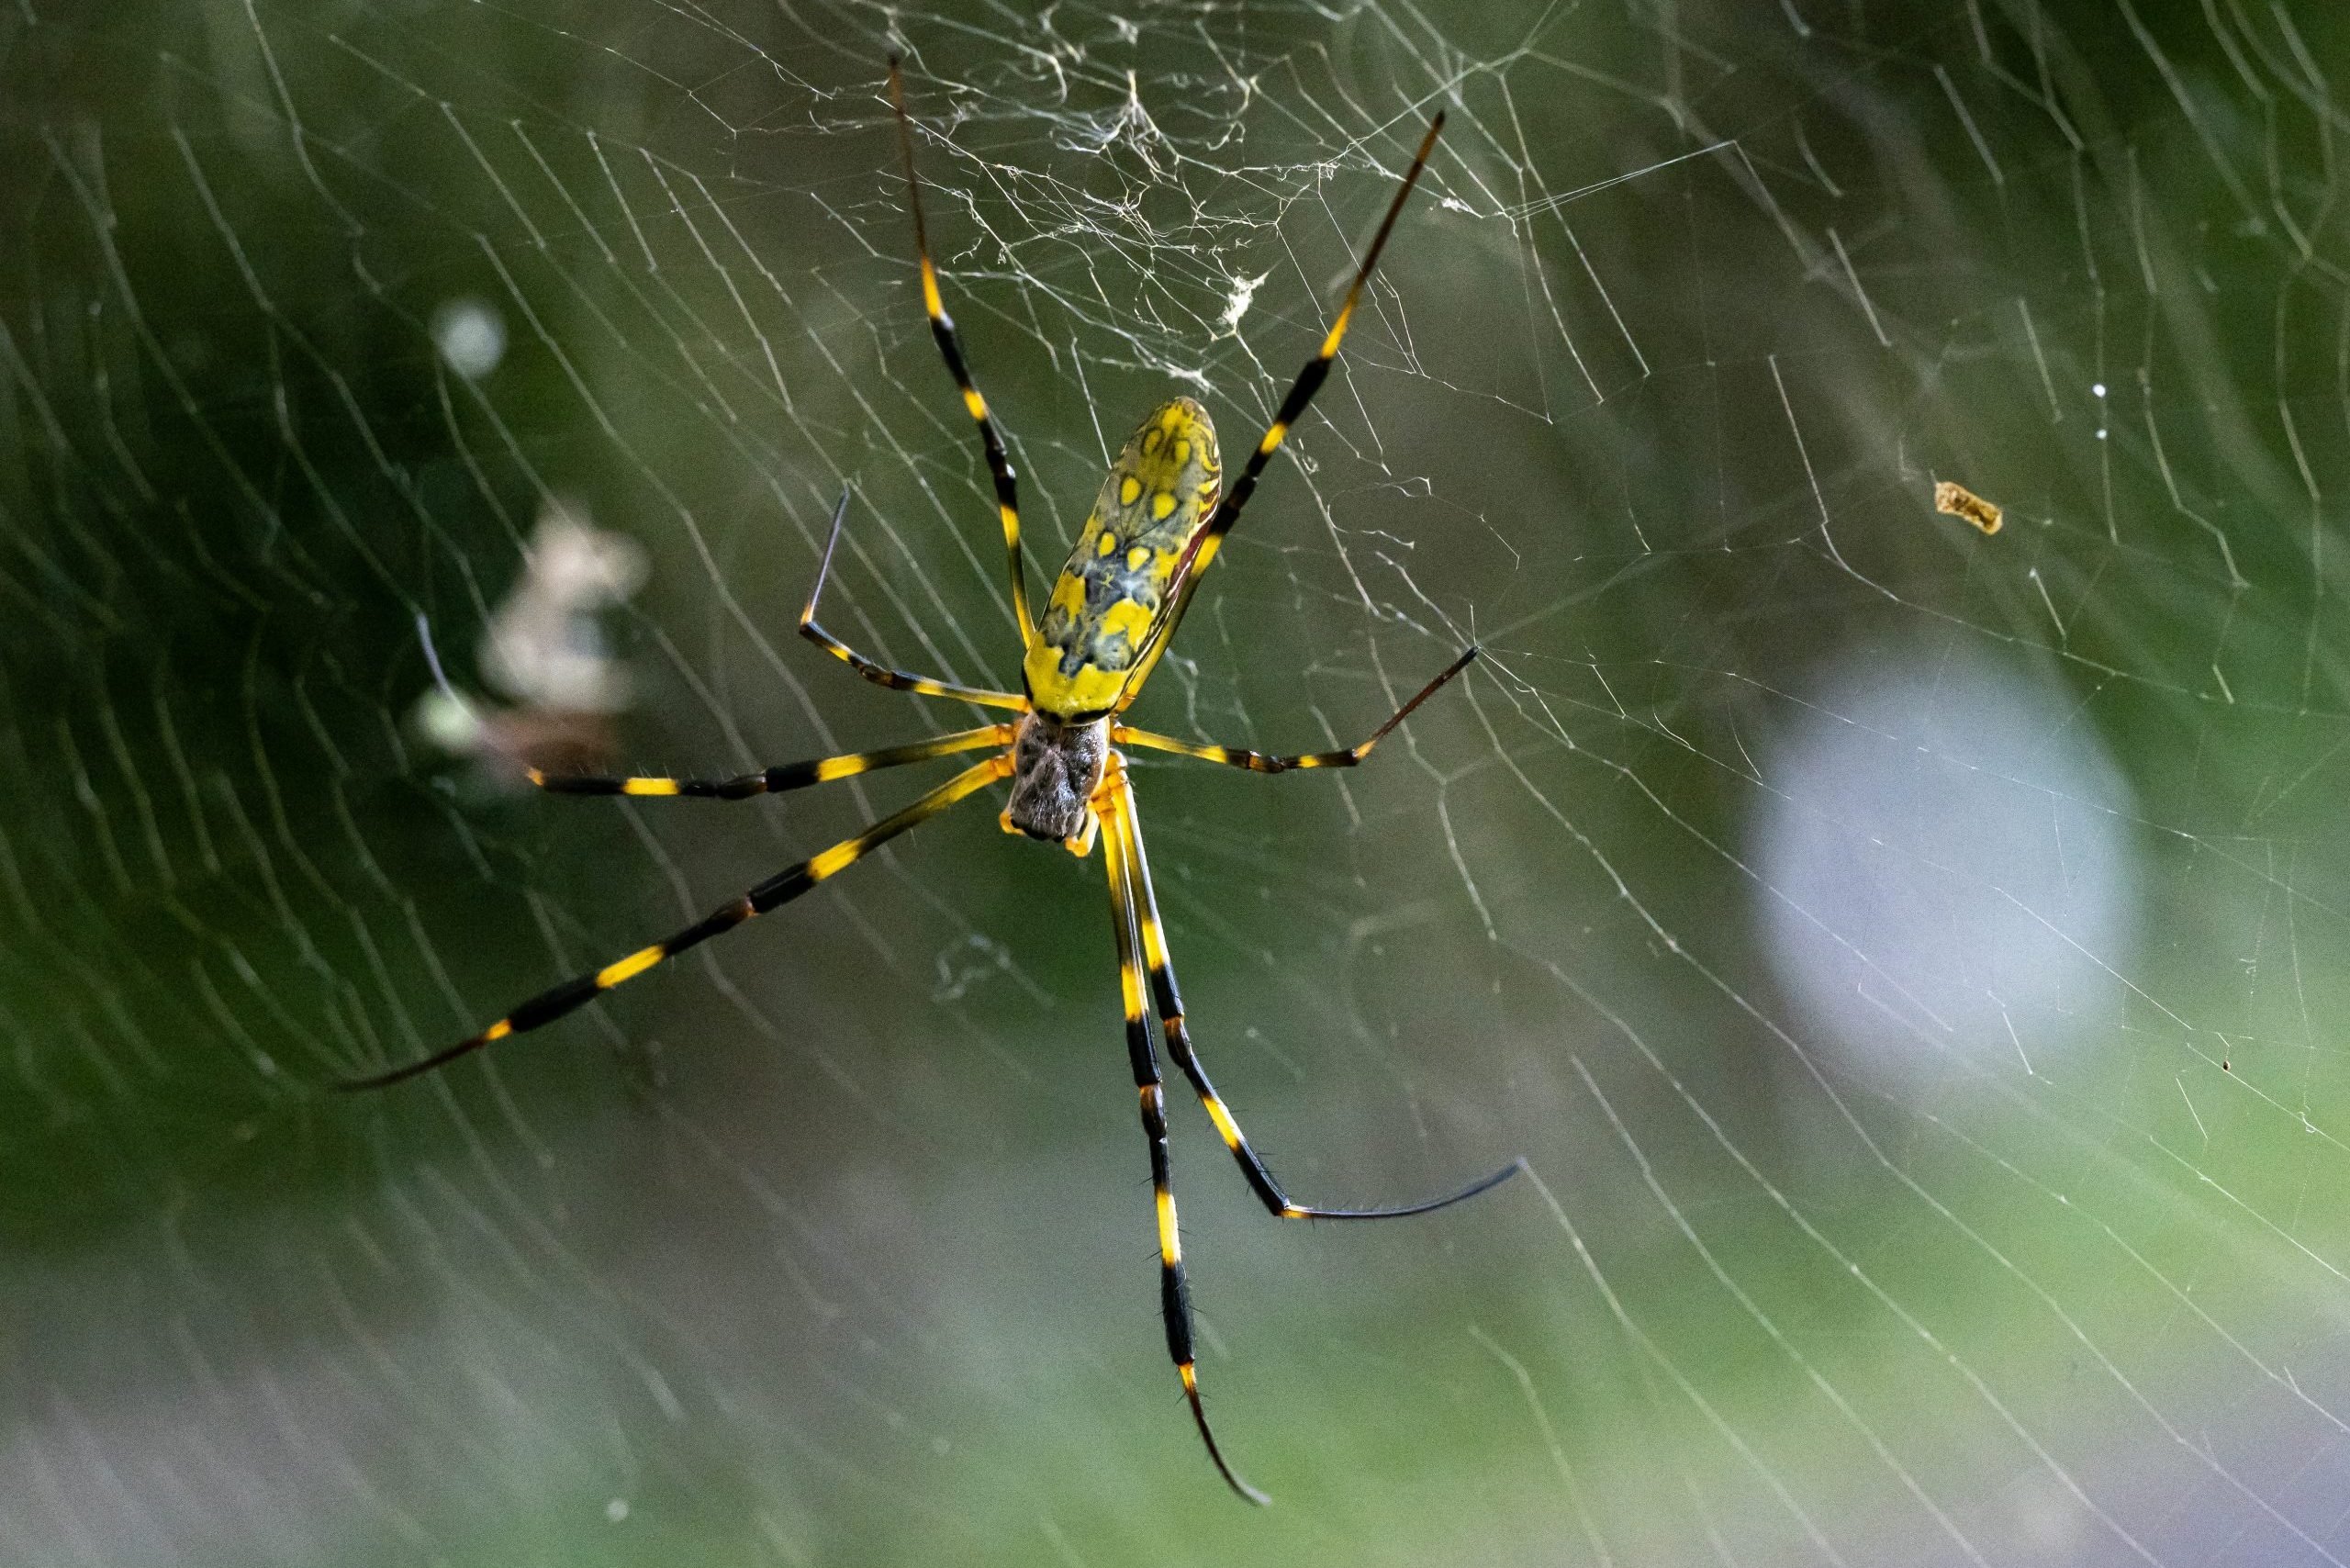 An Invasive Spider Species Is Spreading Across the U.S.